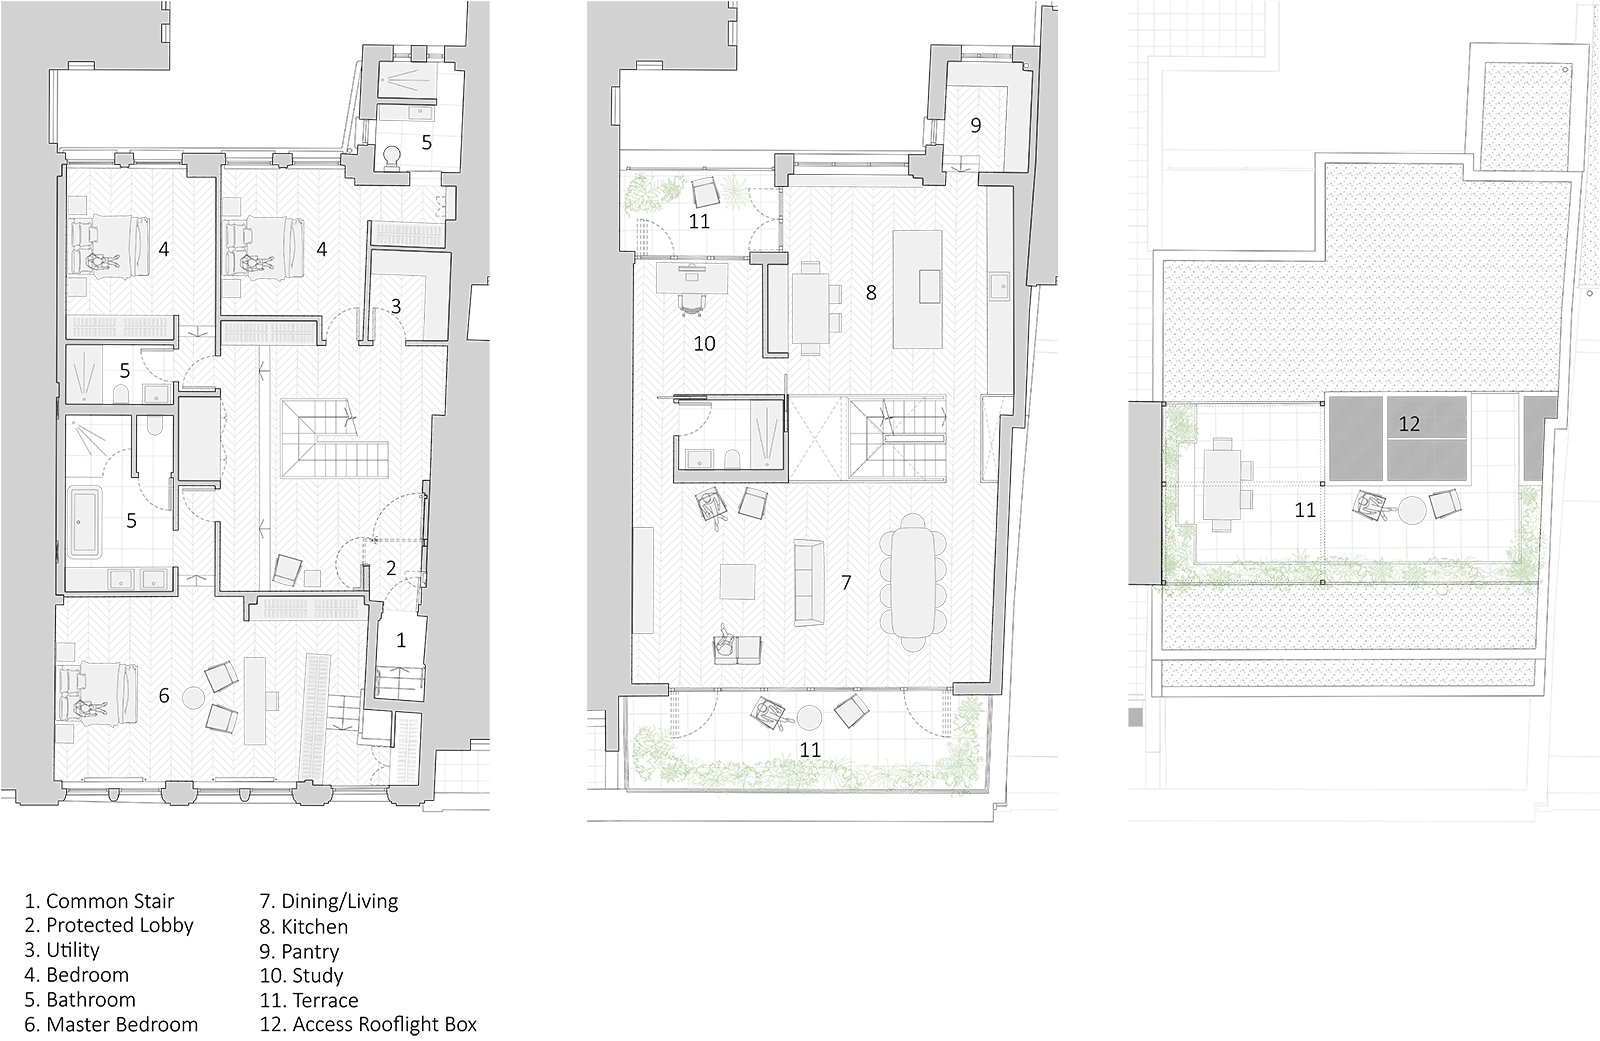 Old Steet Rooftop Extension: Floor plans